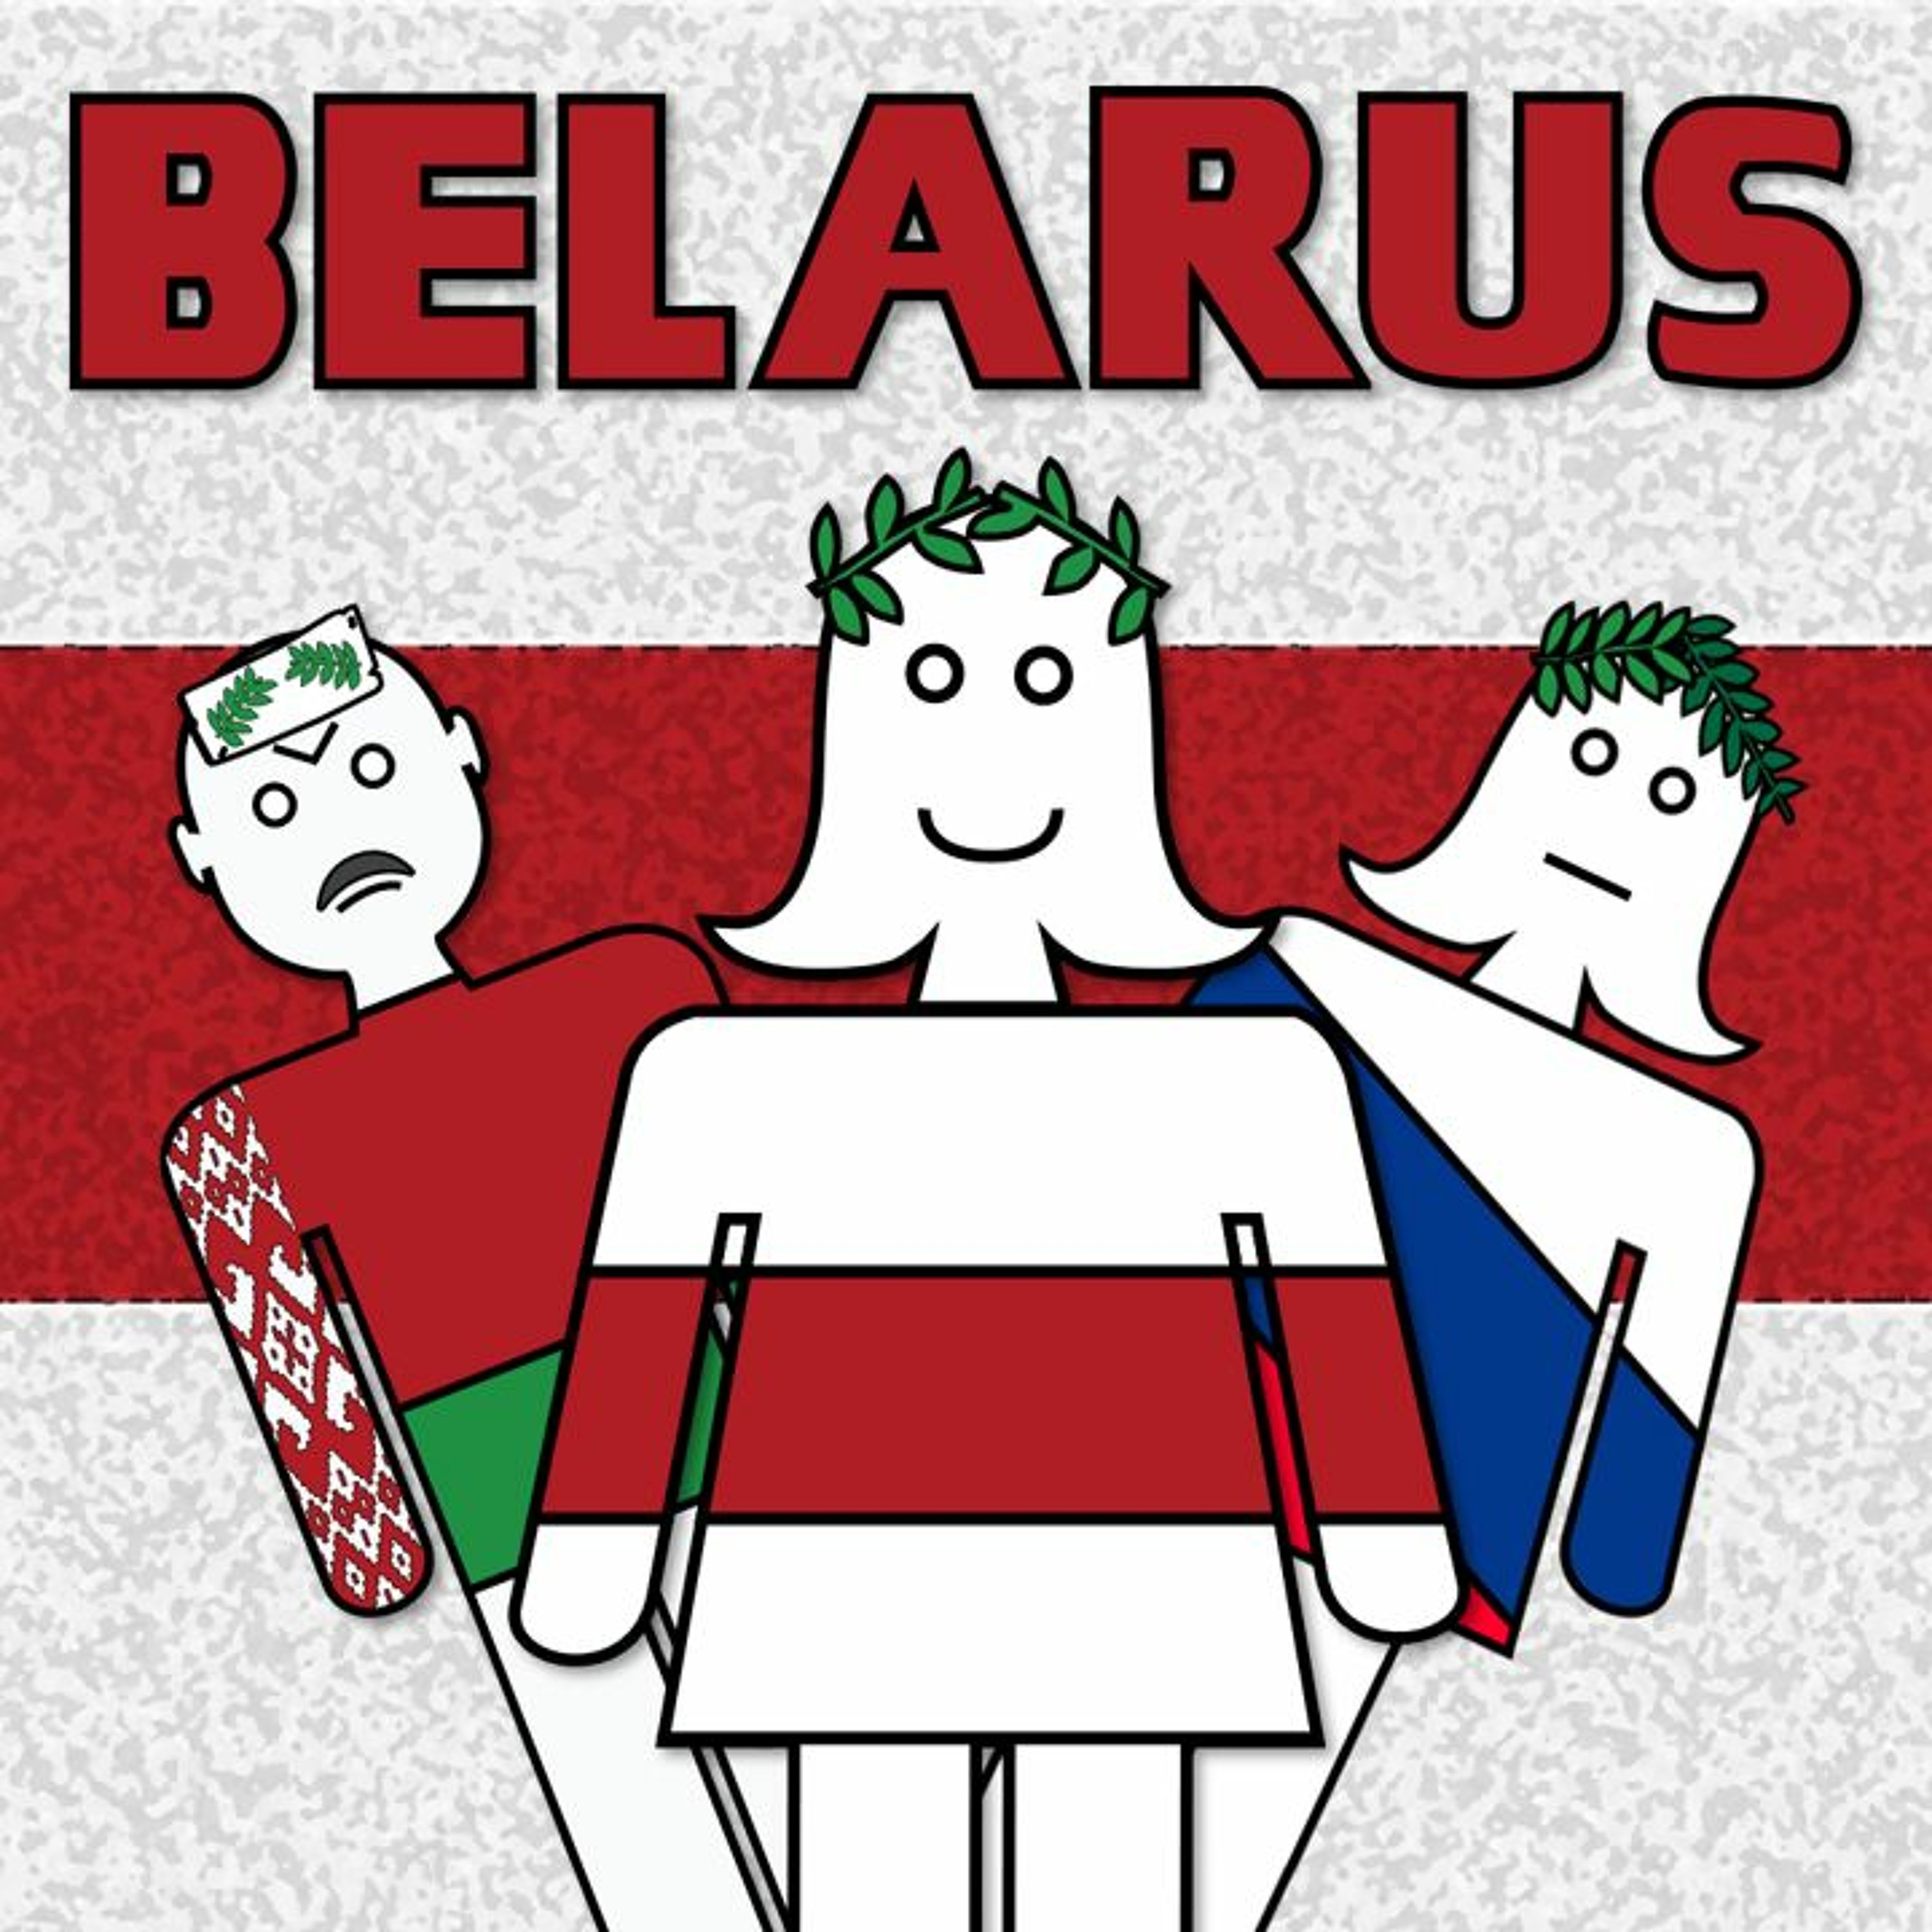 Belarus, a última ditadura da Europa